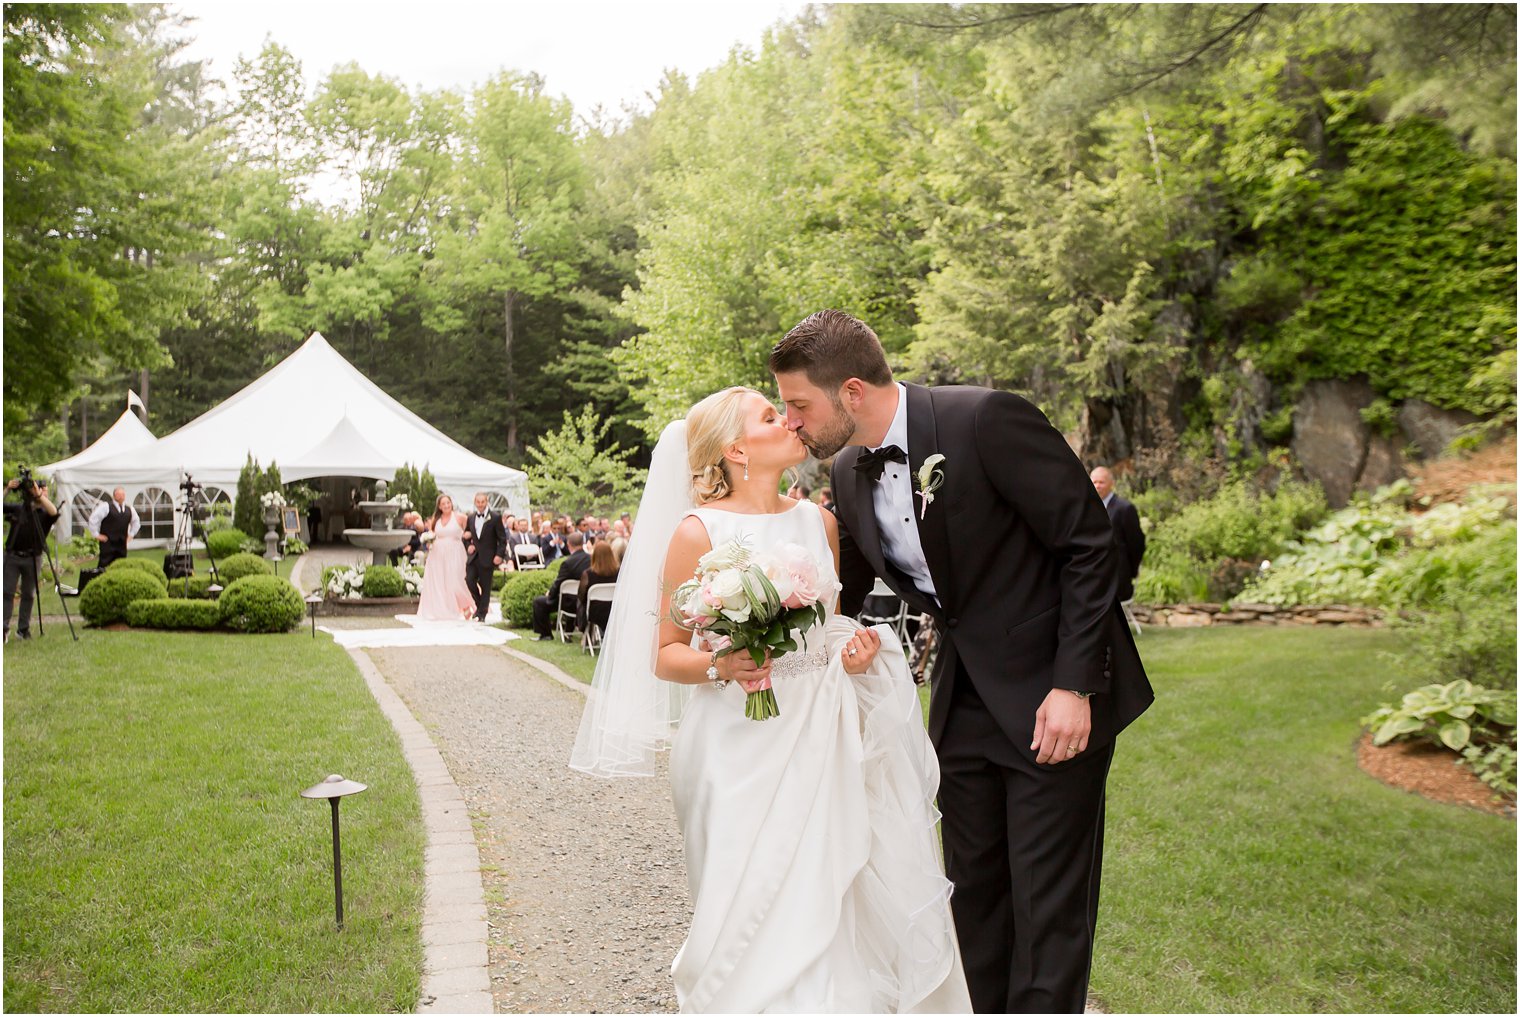 Wedding ceremony at Castle Hill Inn Resort in Ludlow, Vermont